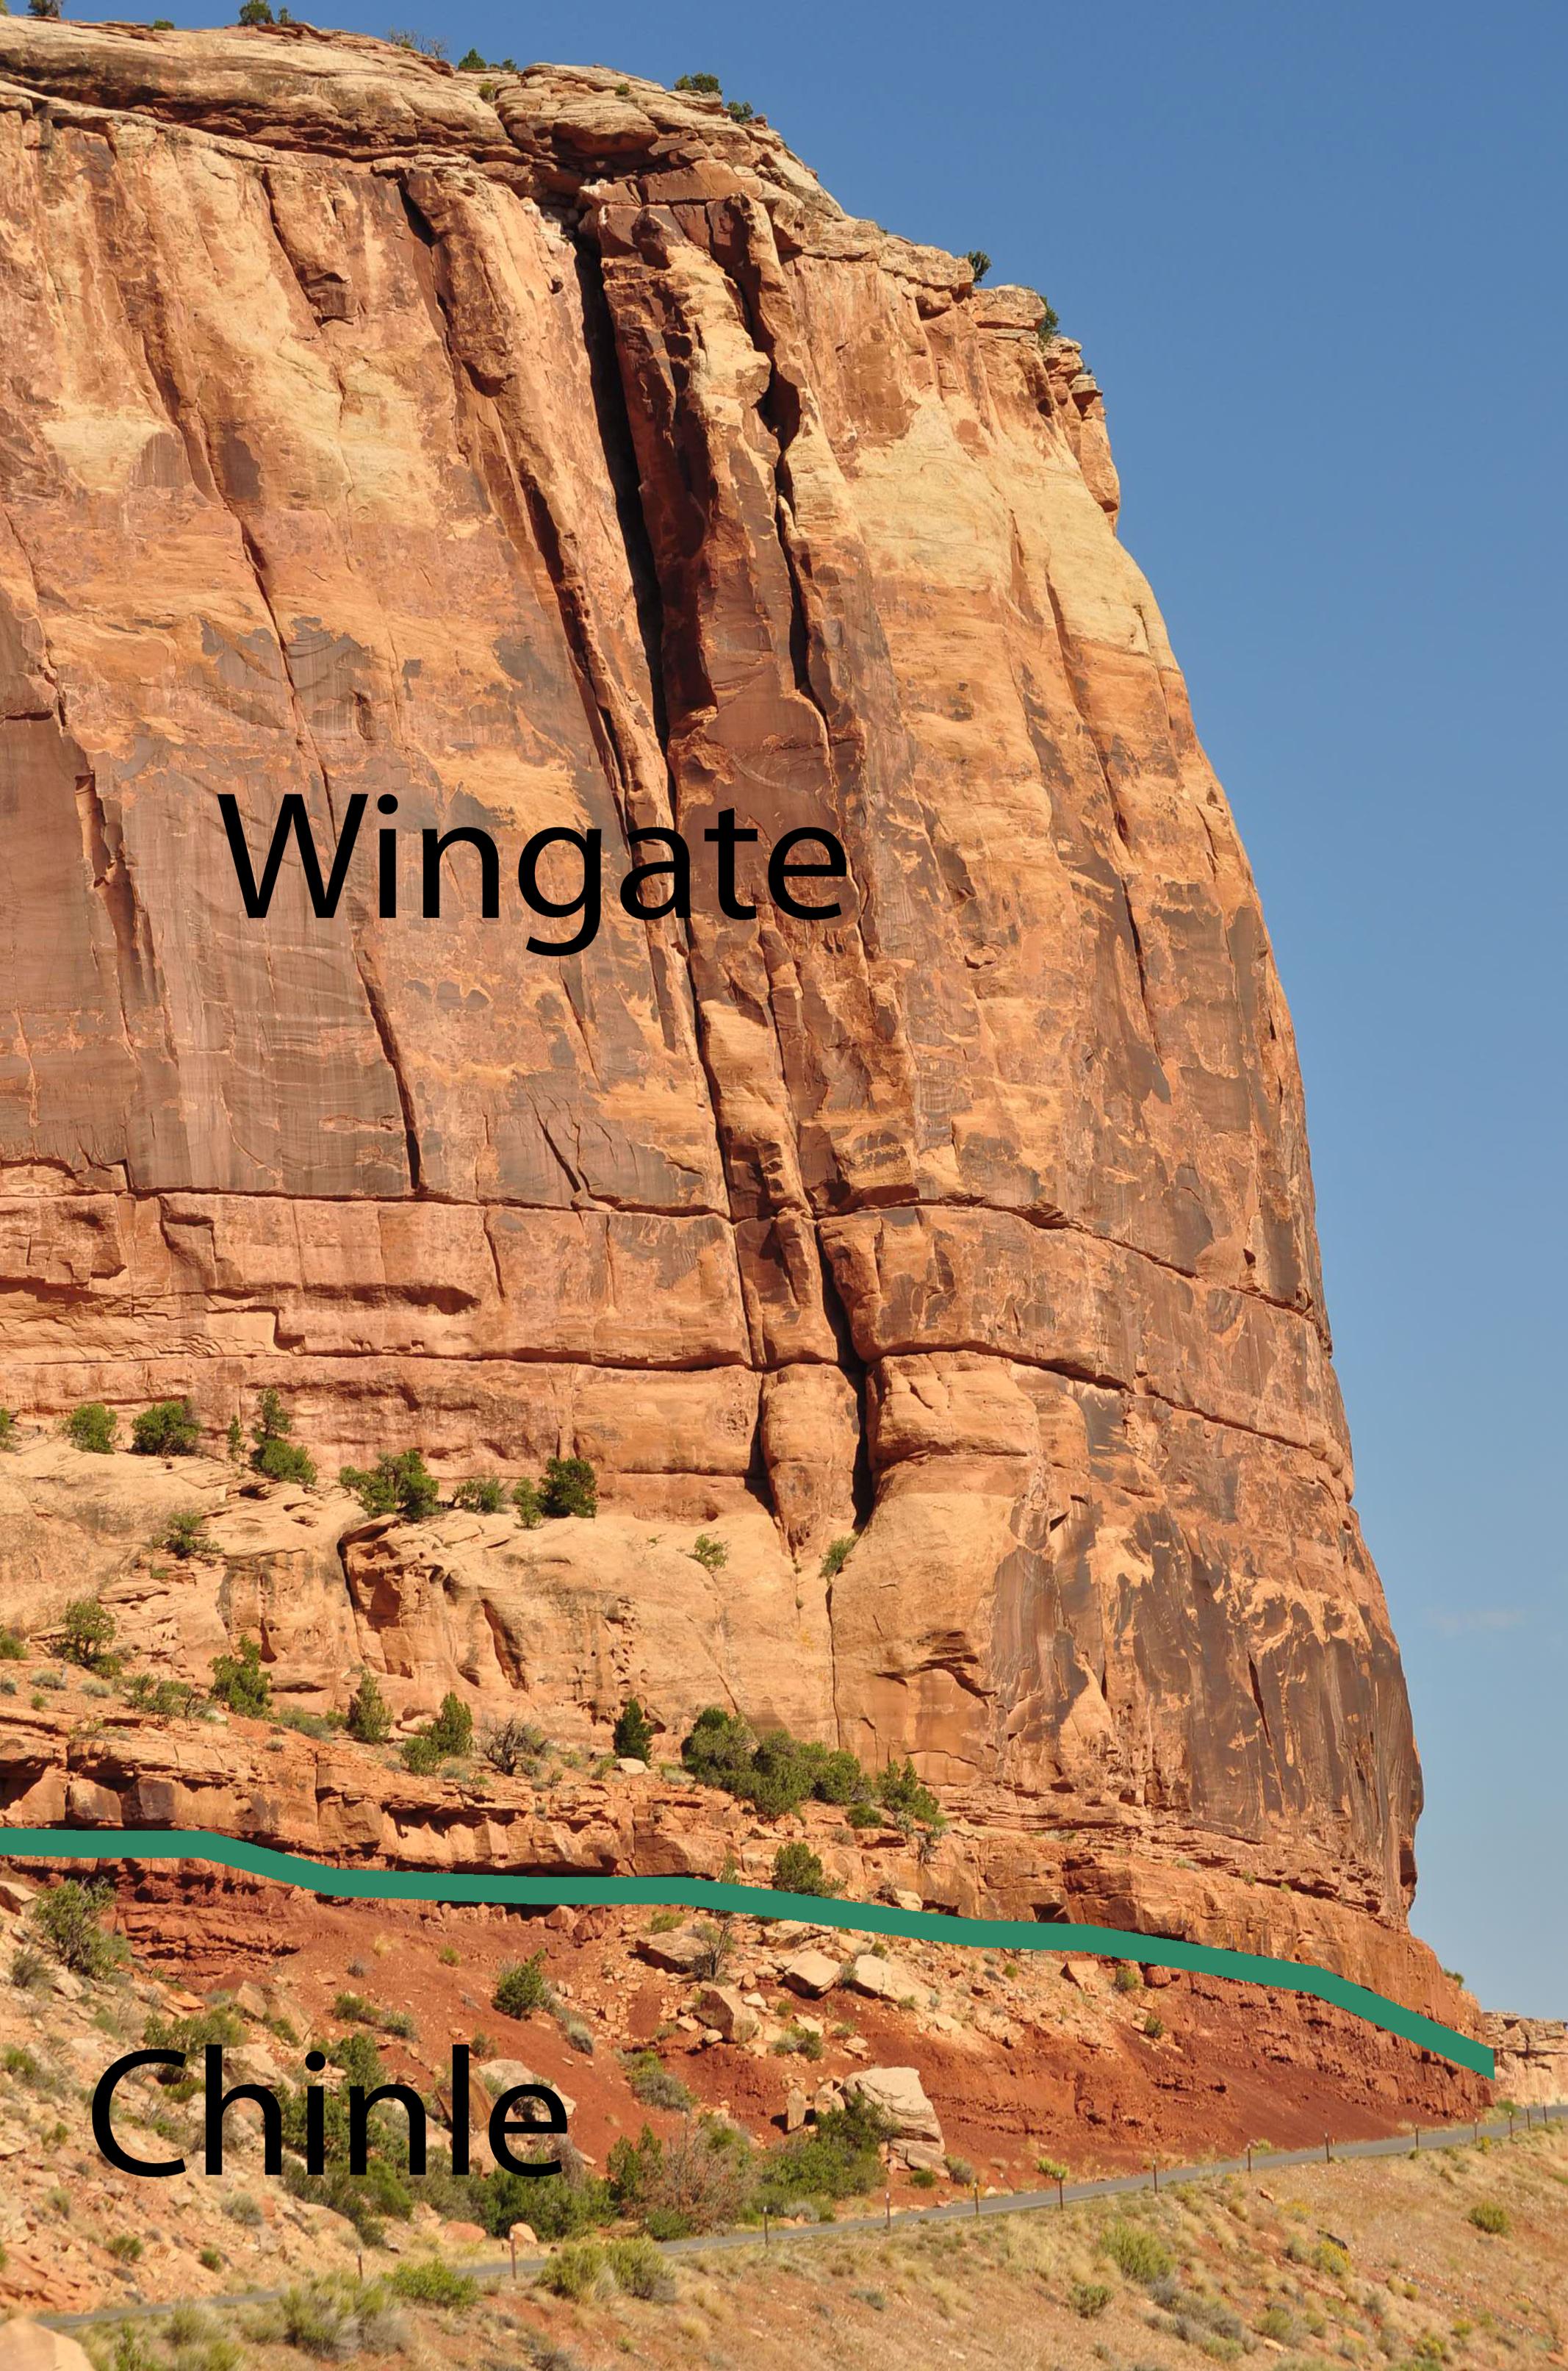 Wingate Sandstone Wingate Sandstone Colorado National Monument US National Park